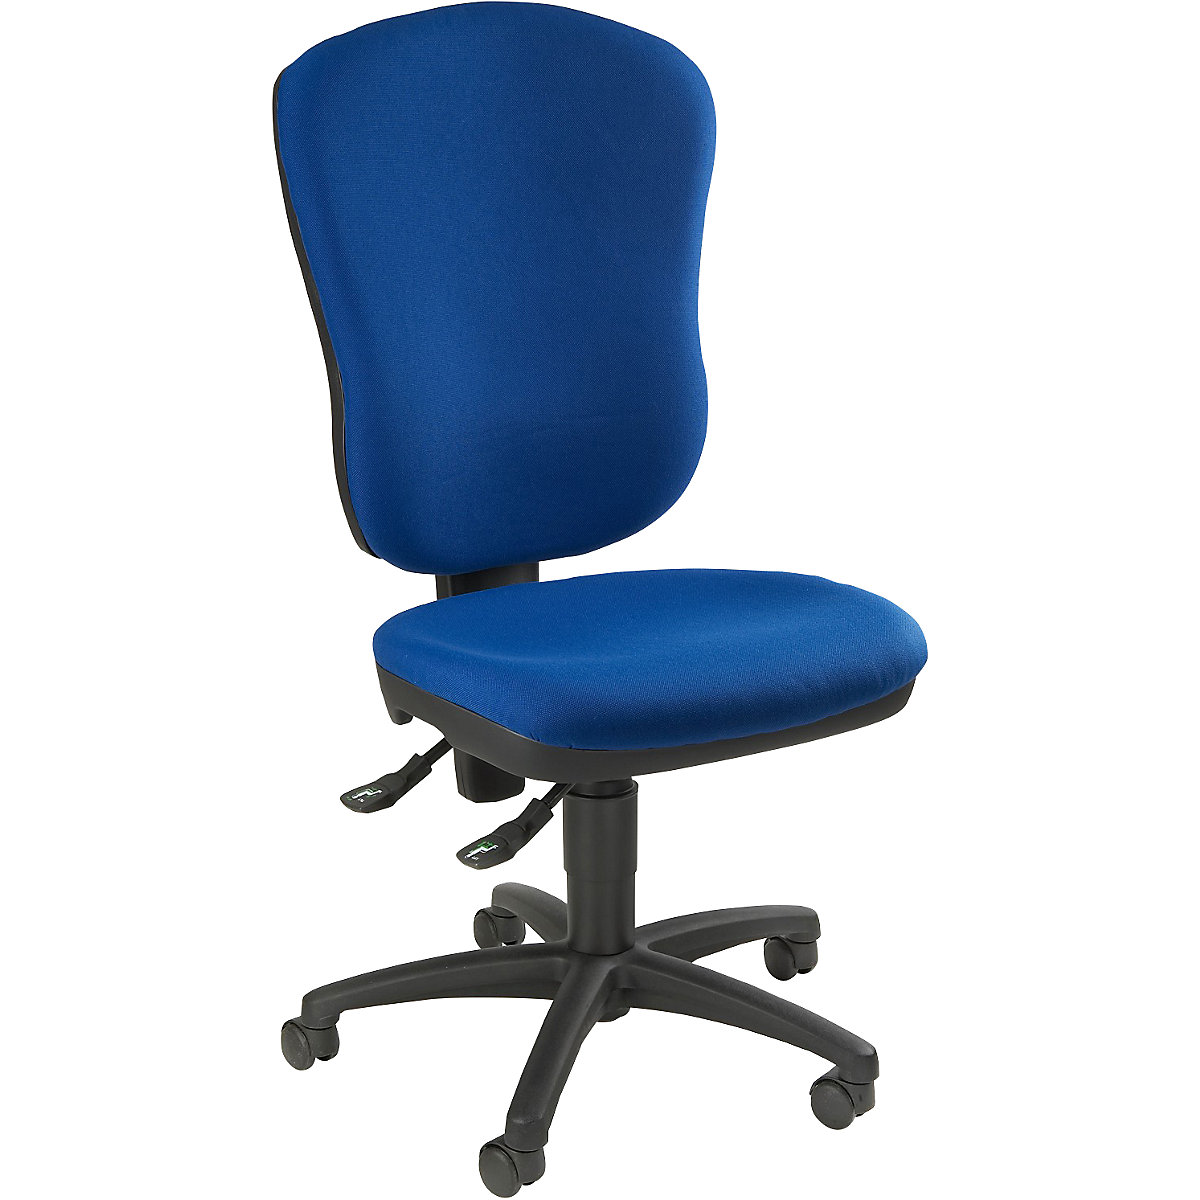 Štandardná otočná stolička – Topstar, bez lakťových opierok, s opierkou bedrových stavcov, výška operadla 570 mm, poťah kráľovská modrá, od 3 kusov-1